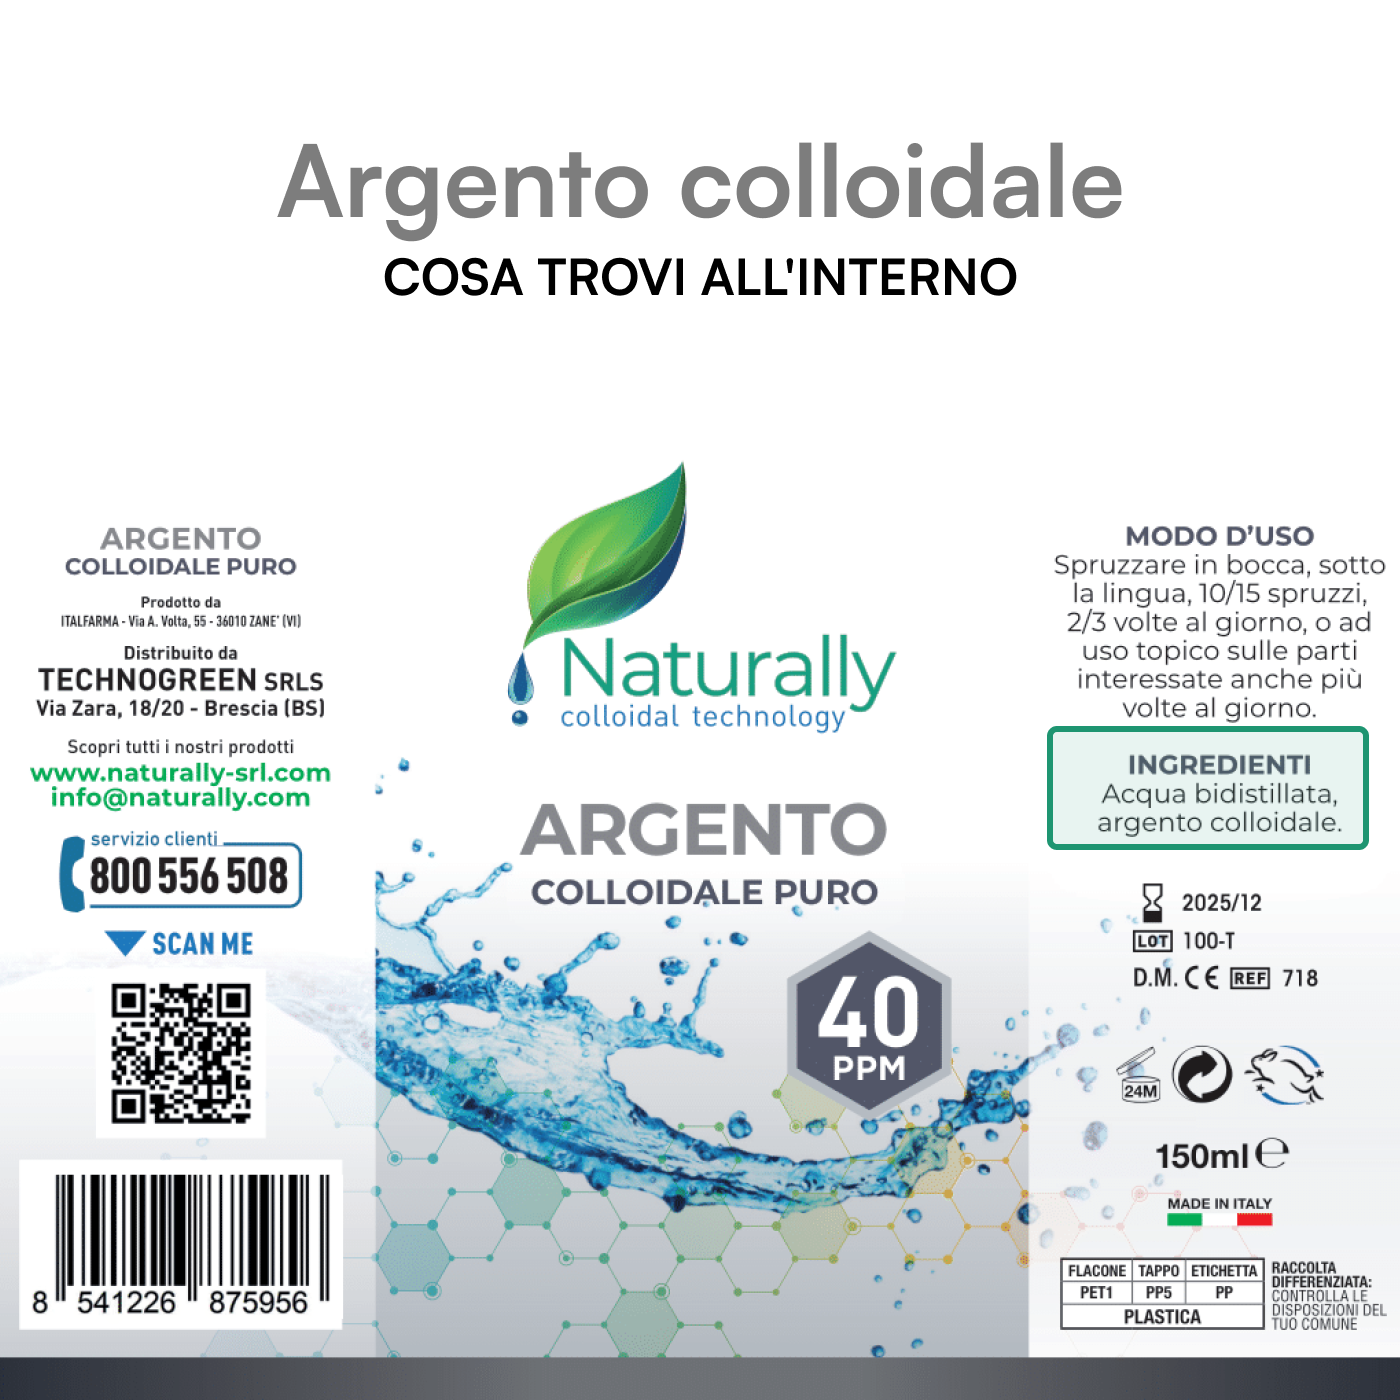 Argento Colloidale Puro – Naturally